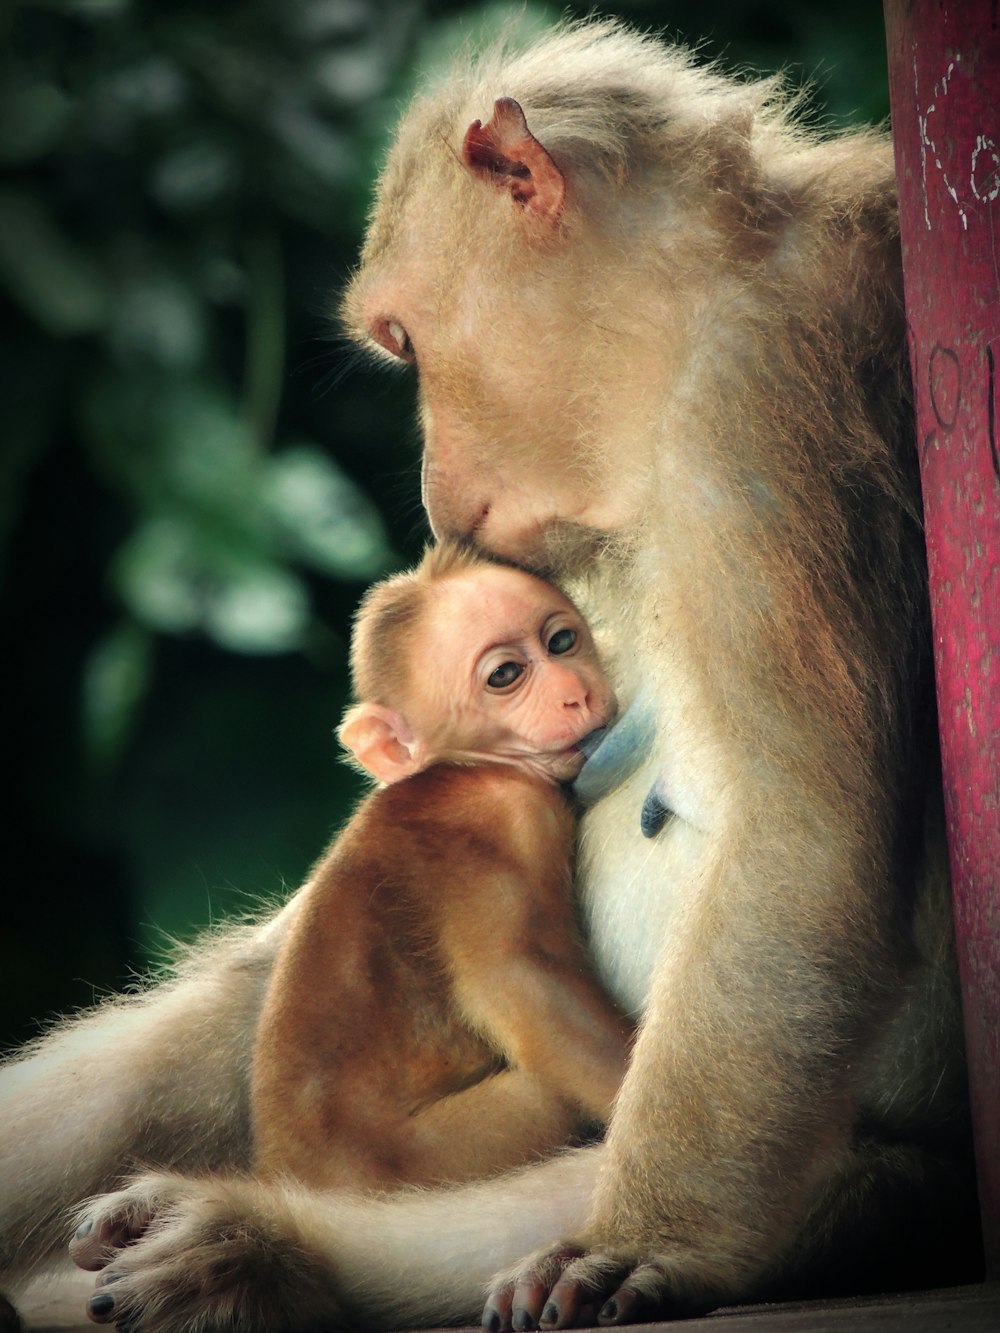 brown monkey holding baby monkey